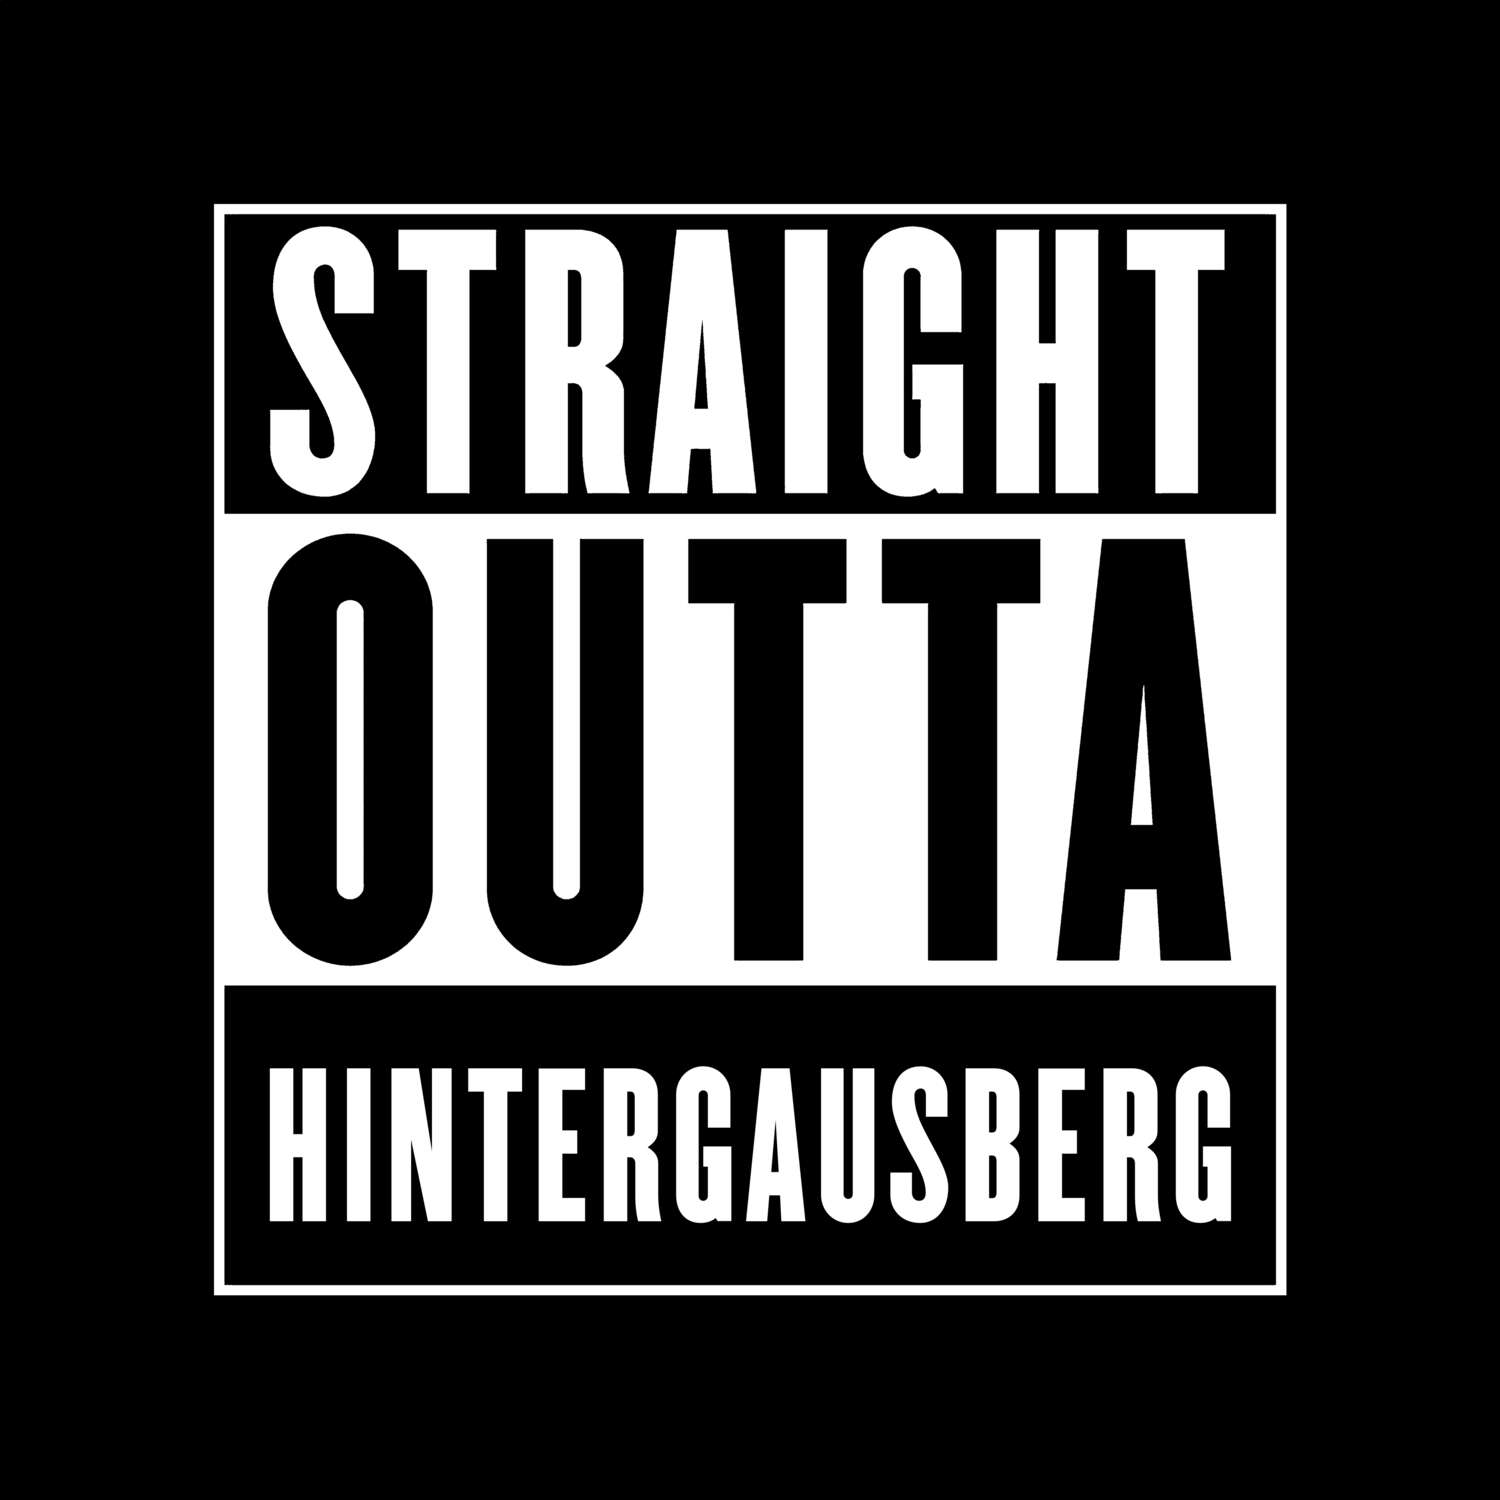 Hintergausberg T-Shirt »Straight Outta«